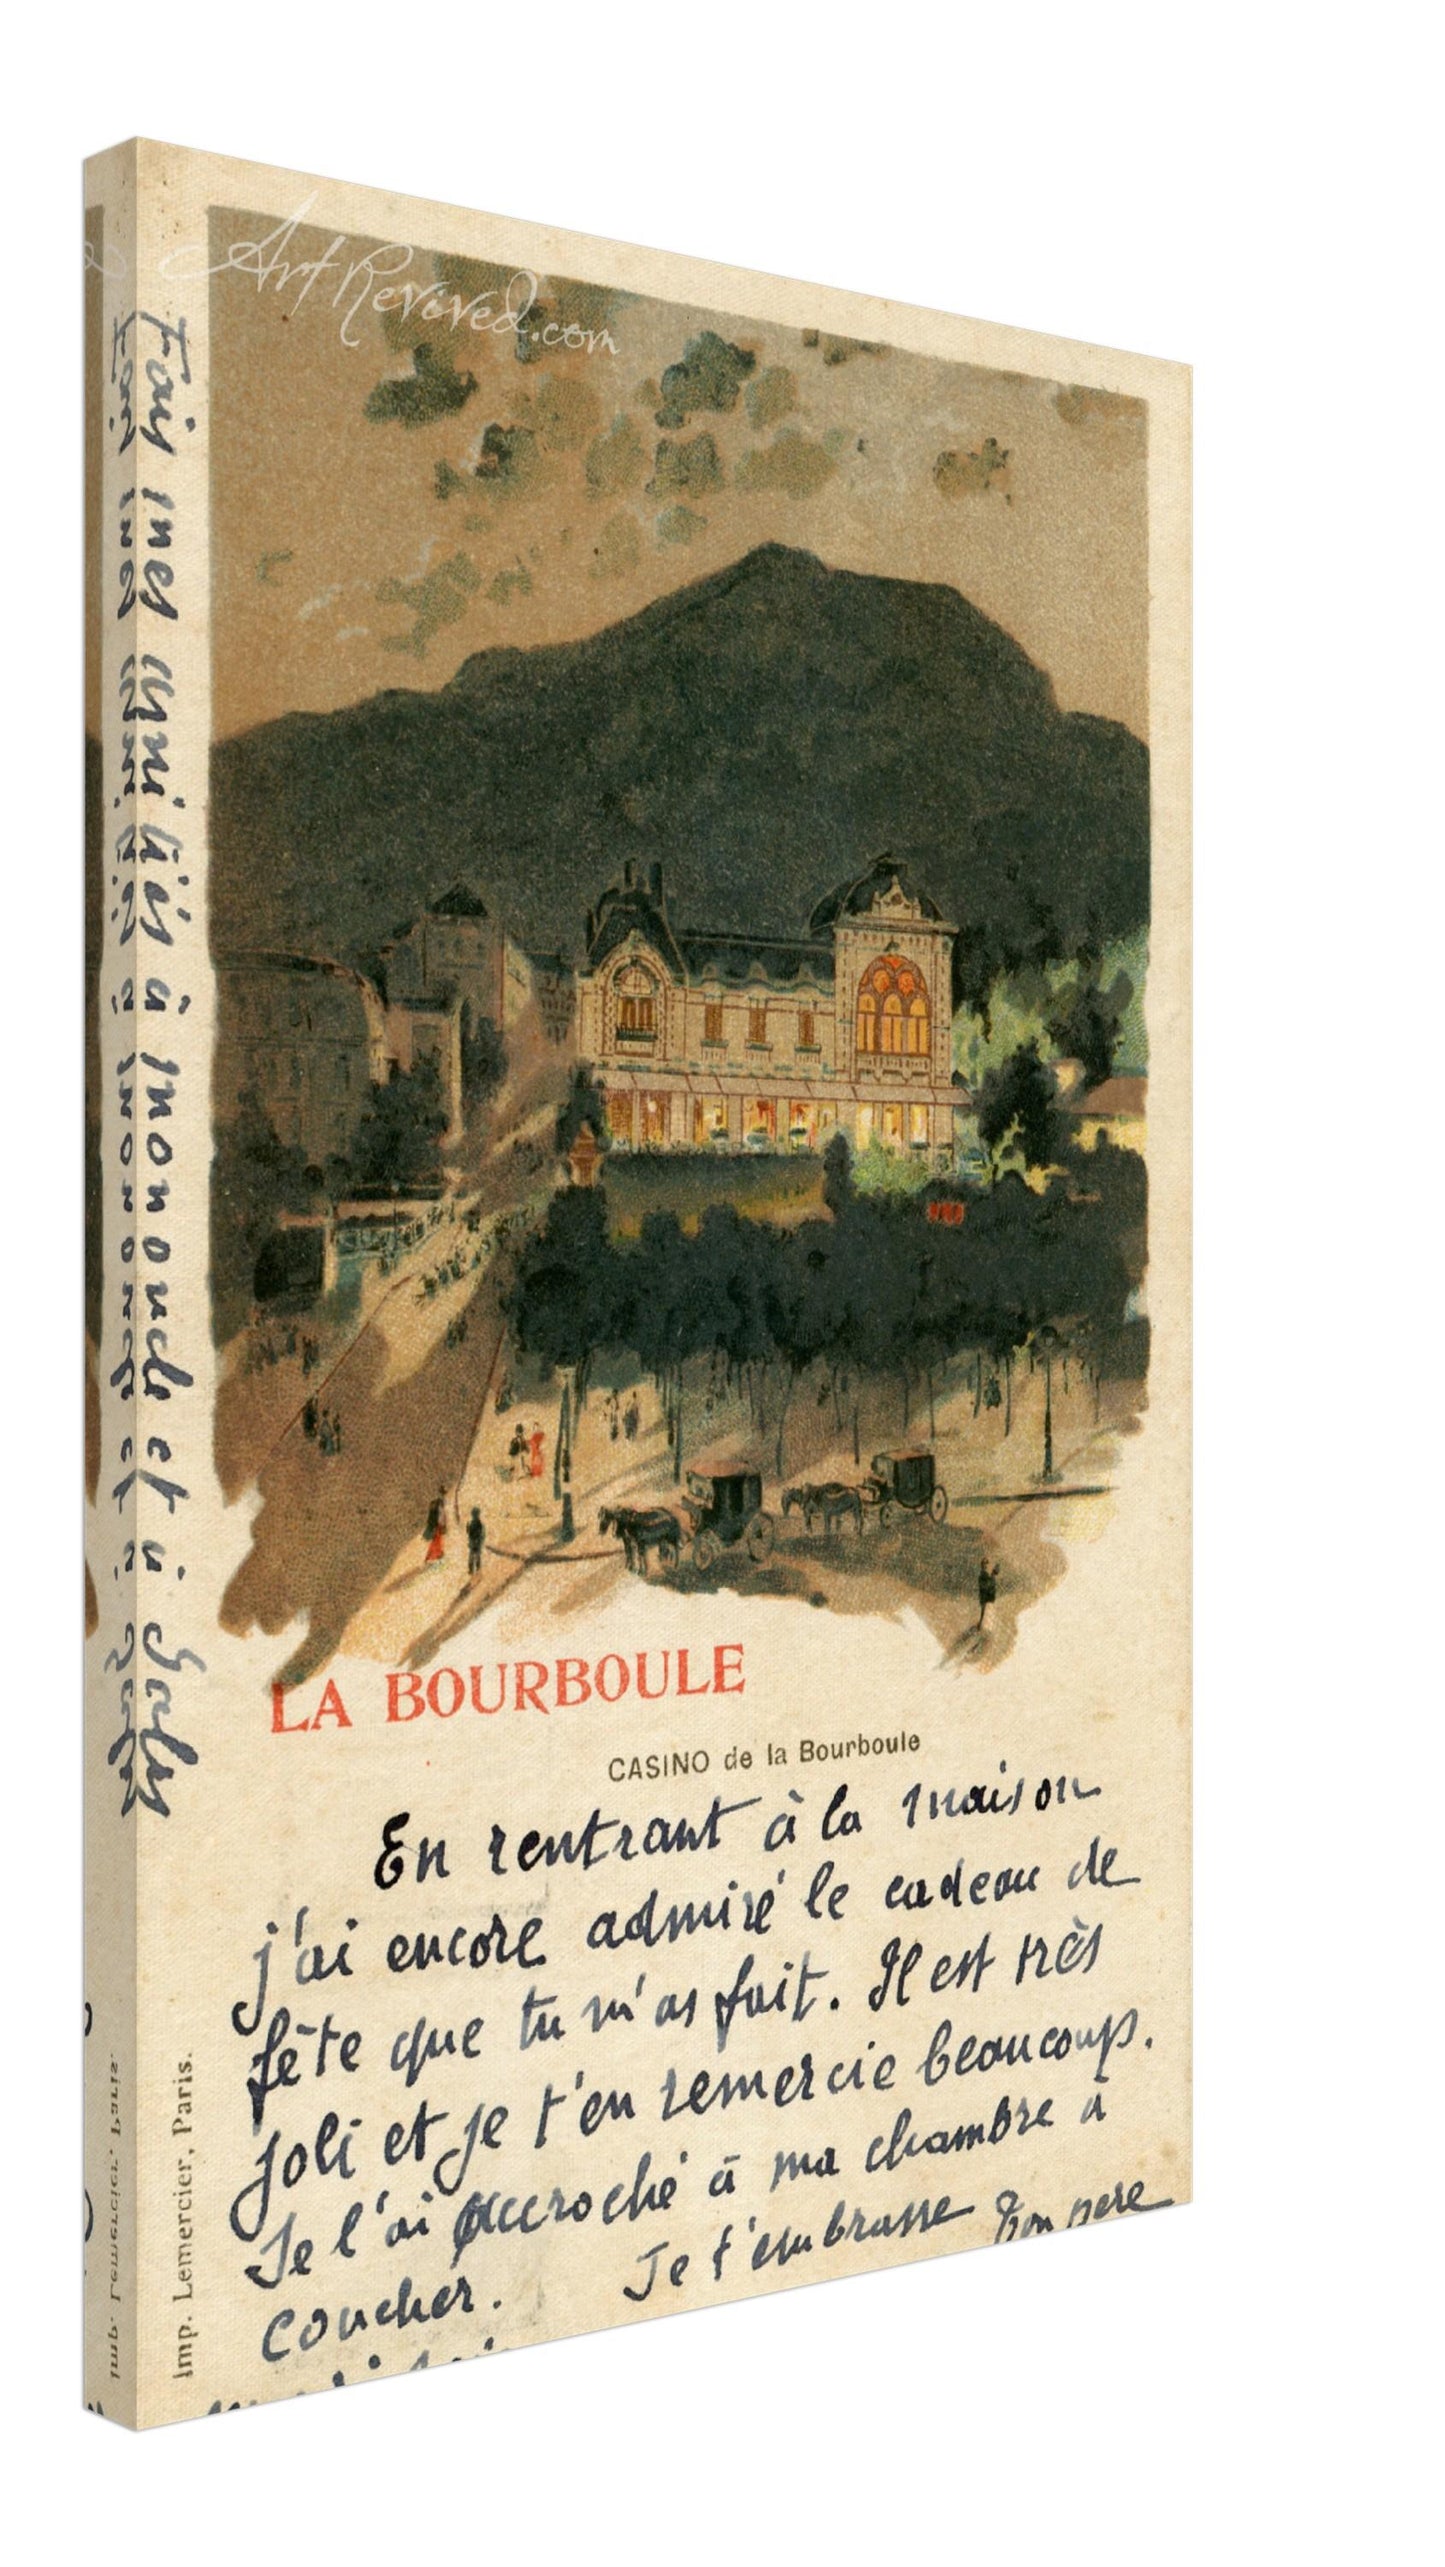 Casino-La Bourboule personal message on the bottom